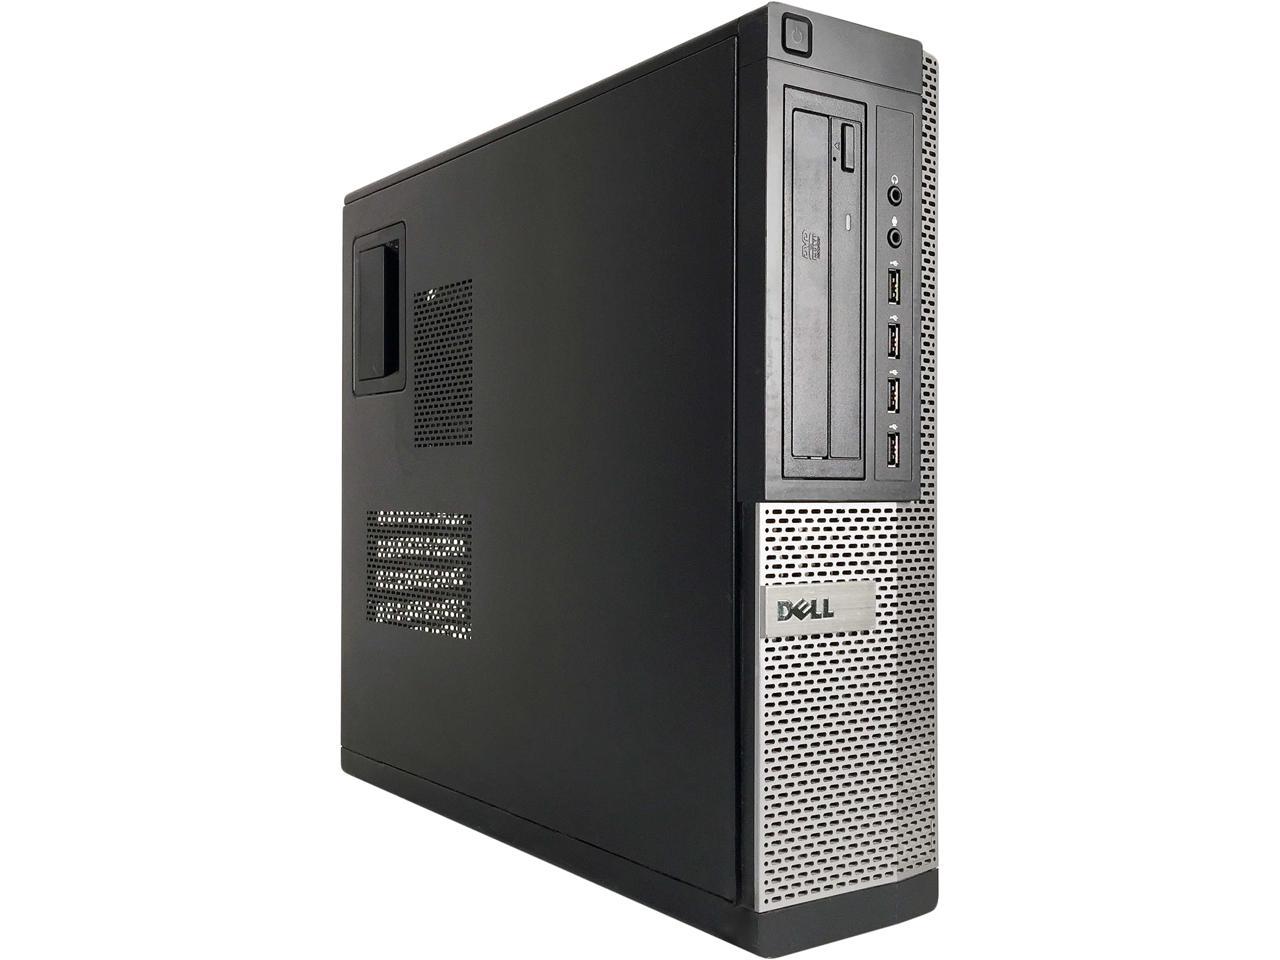 Dell Grade A OptiPlex 790 Desktop Computer, Intel Core i7 2600 (3.40 GHz), 12GB DDR3, 500G, DVD, USB WIFI Adapter, USB Bluetooth Adapter, Windows 10 Home 64-bit Multi-language